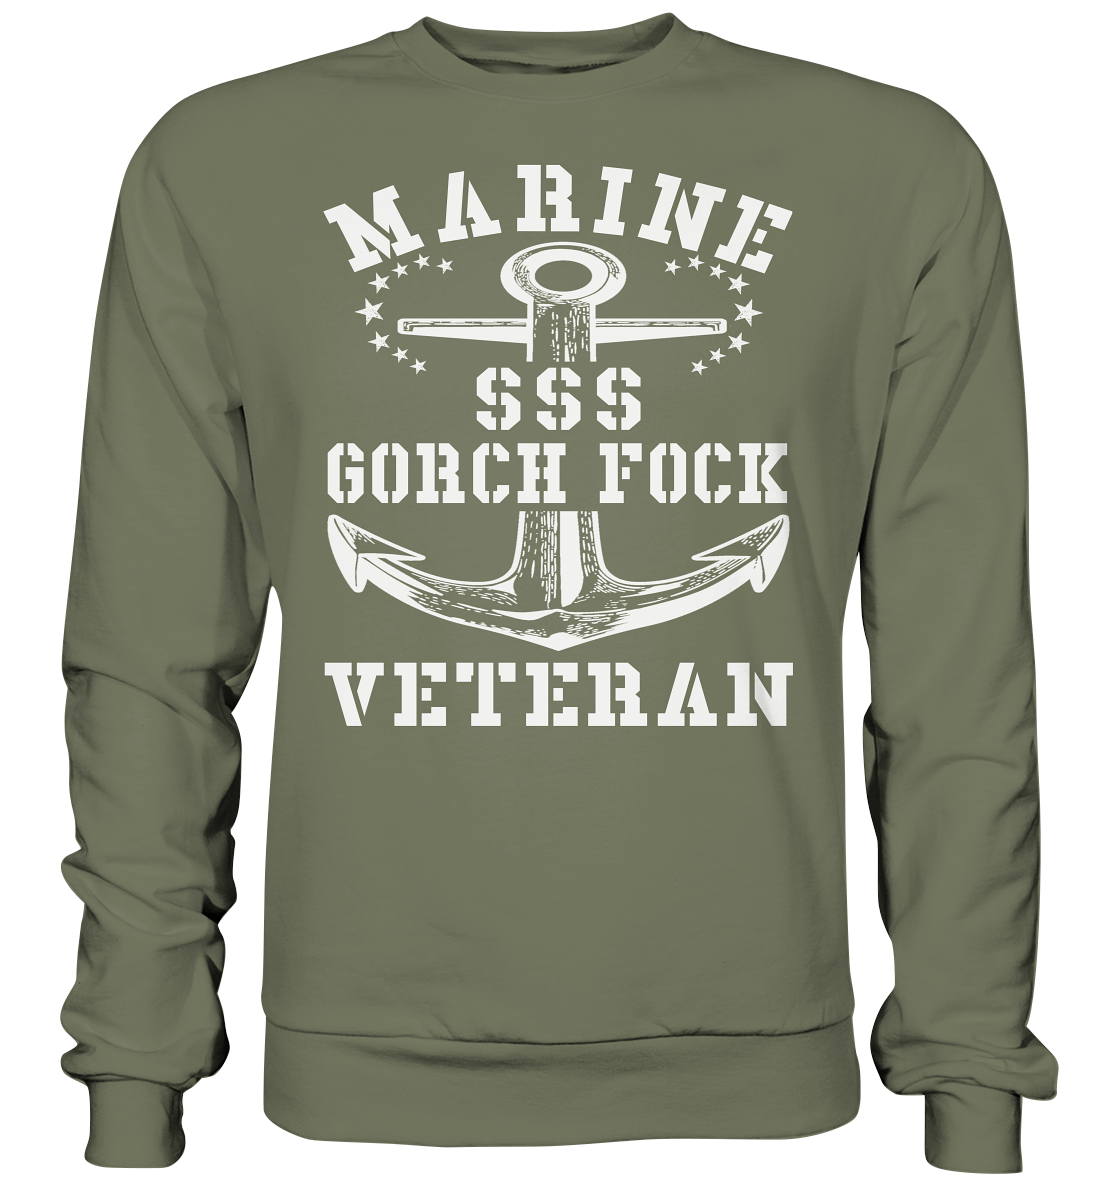 SSS GORCH FOCK MARINE VETERAN  - Premium Sweatshirt